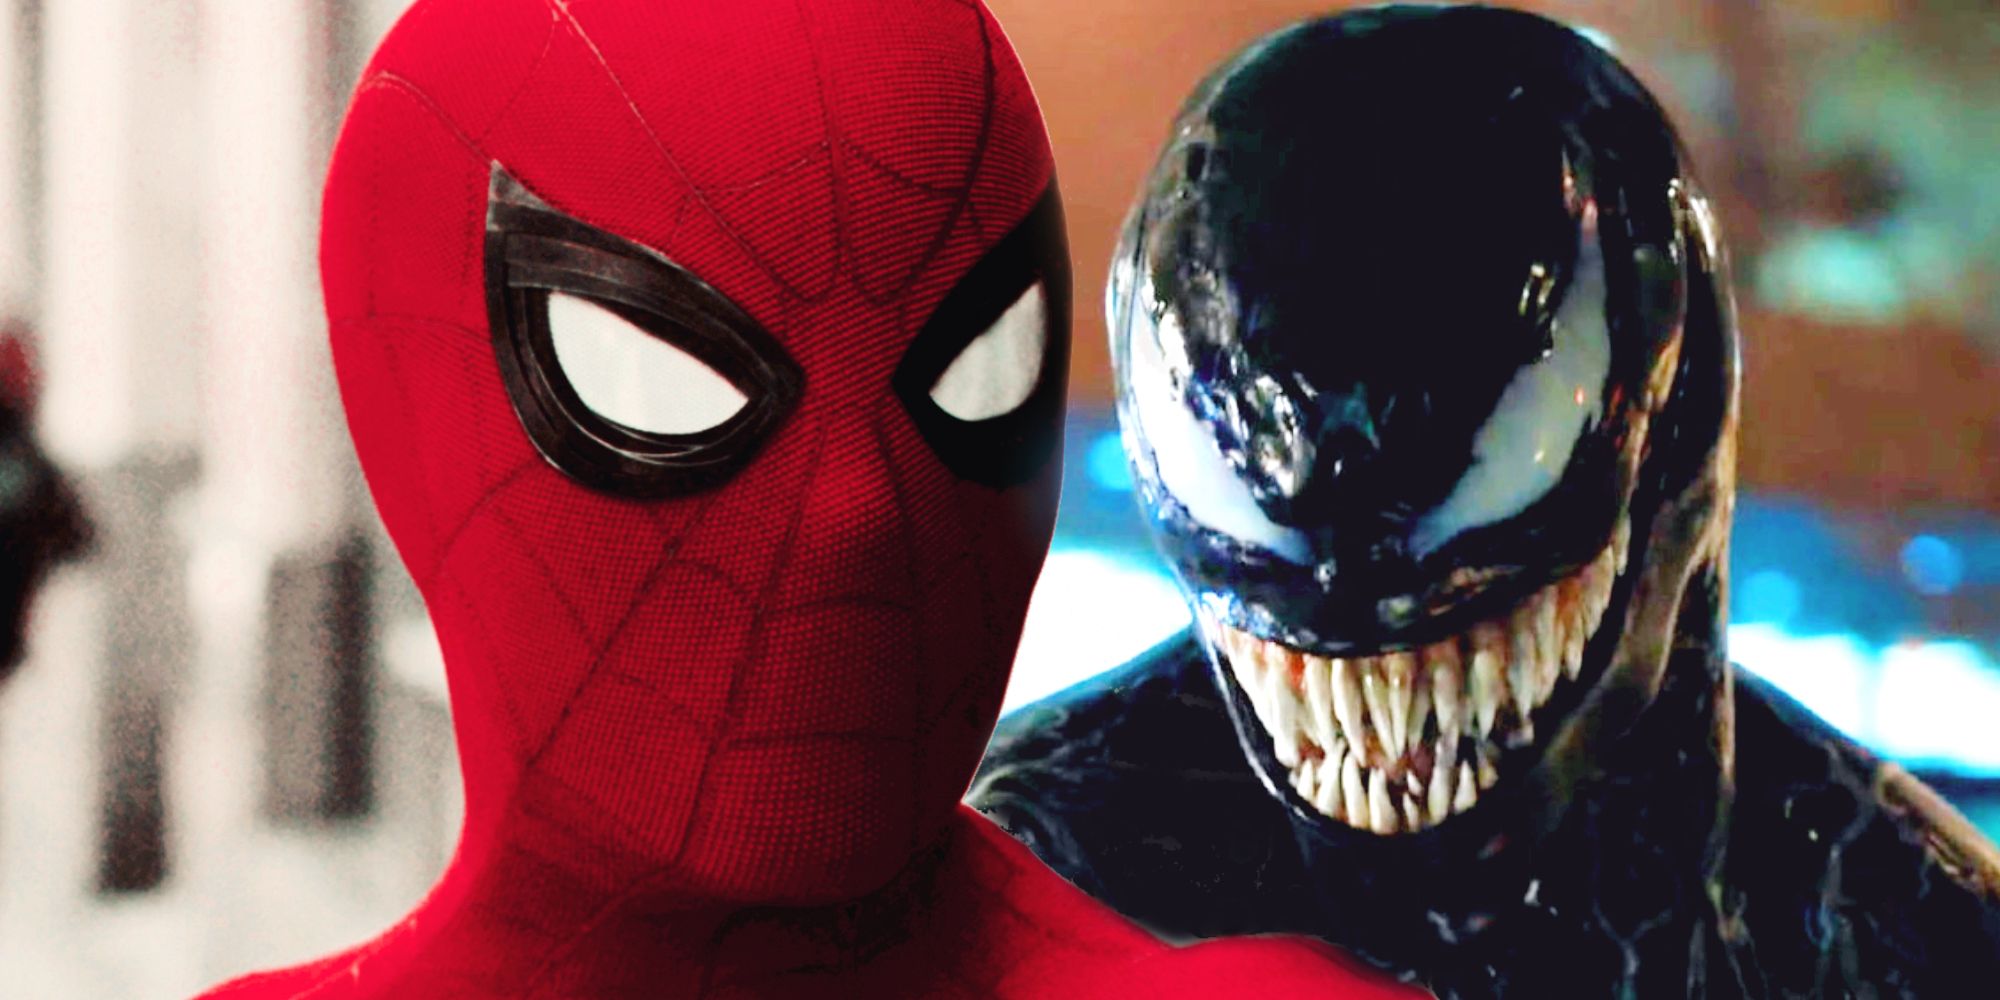 Venom/Spider-Man Crossover ფილმი გამოტოვებდა მათი მოთხრობის დიდ ნაწილს